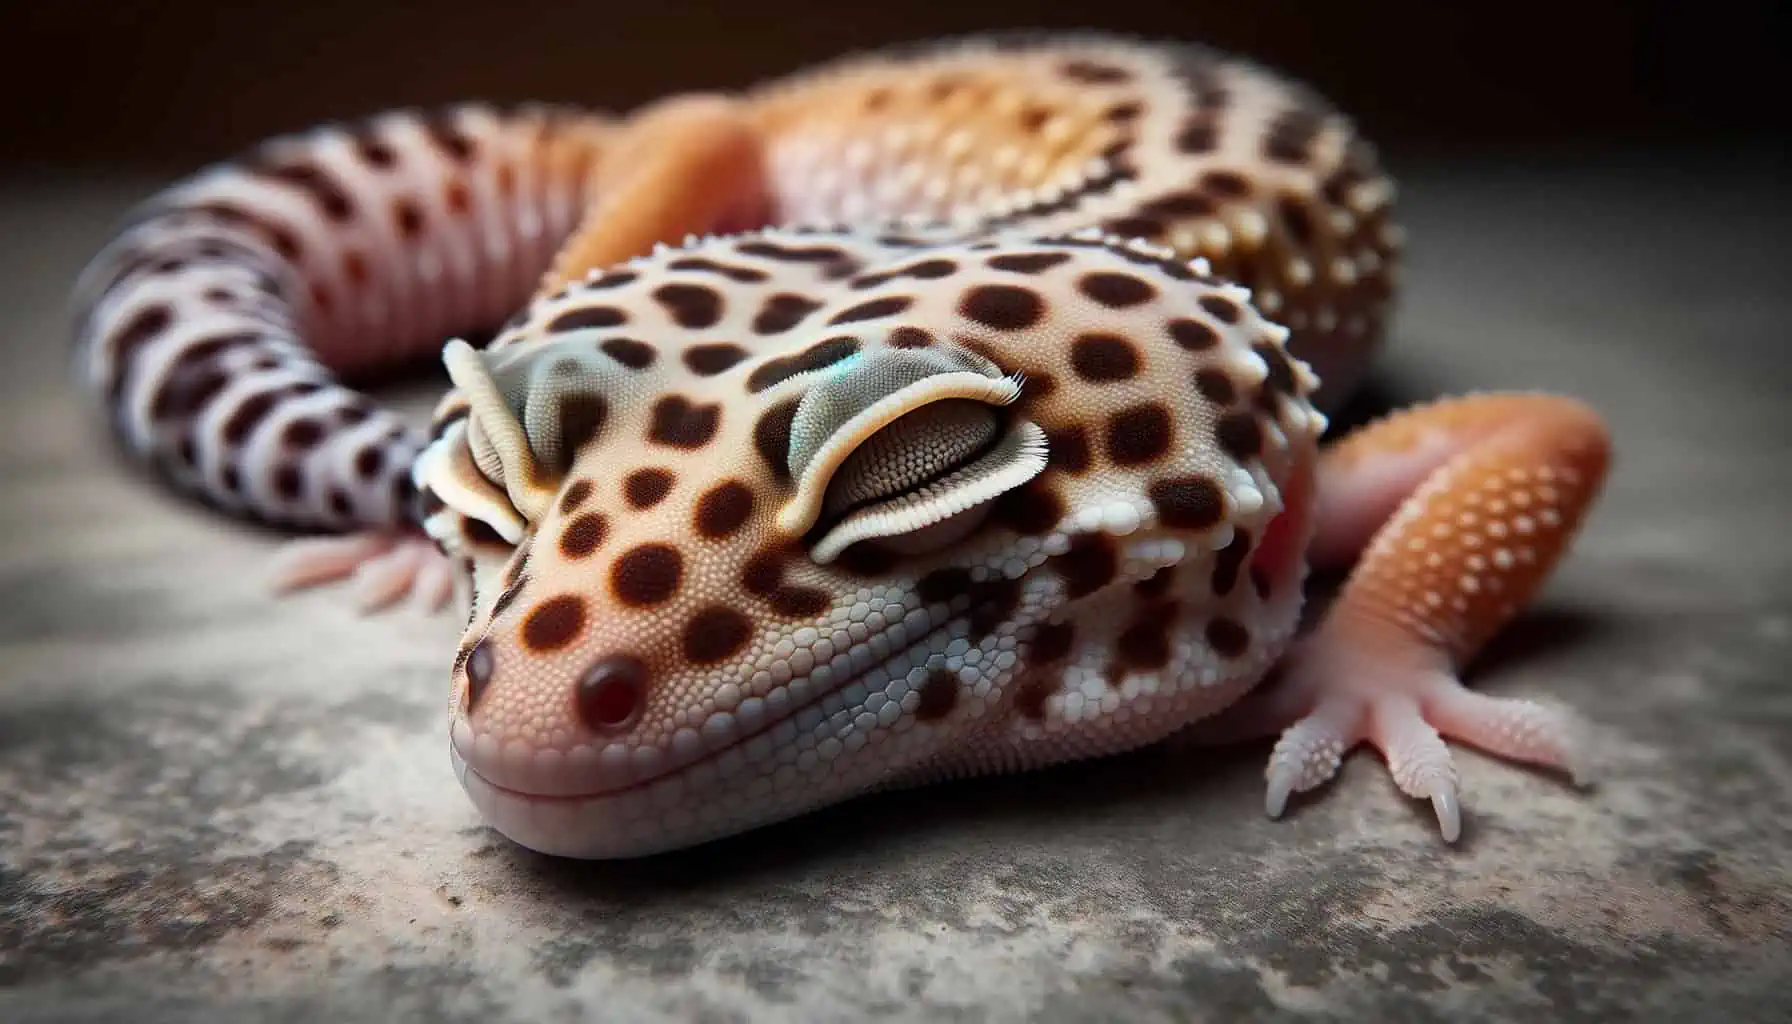 Leopard Gecko blind